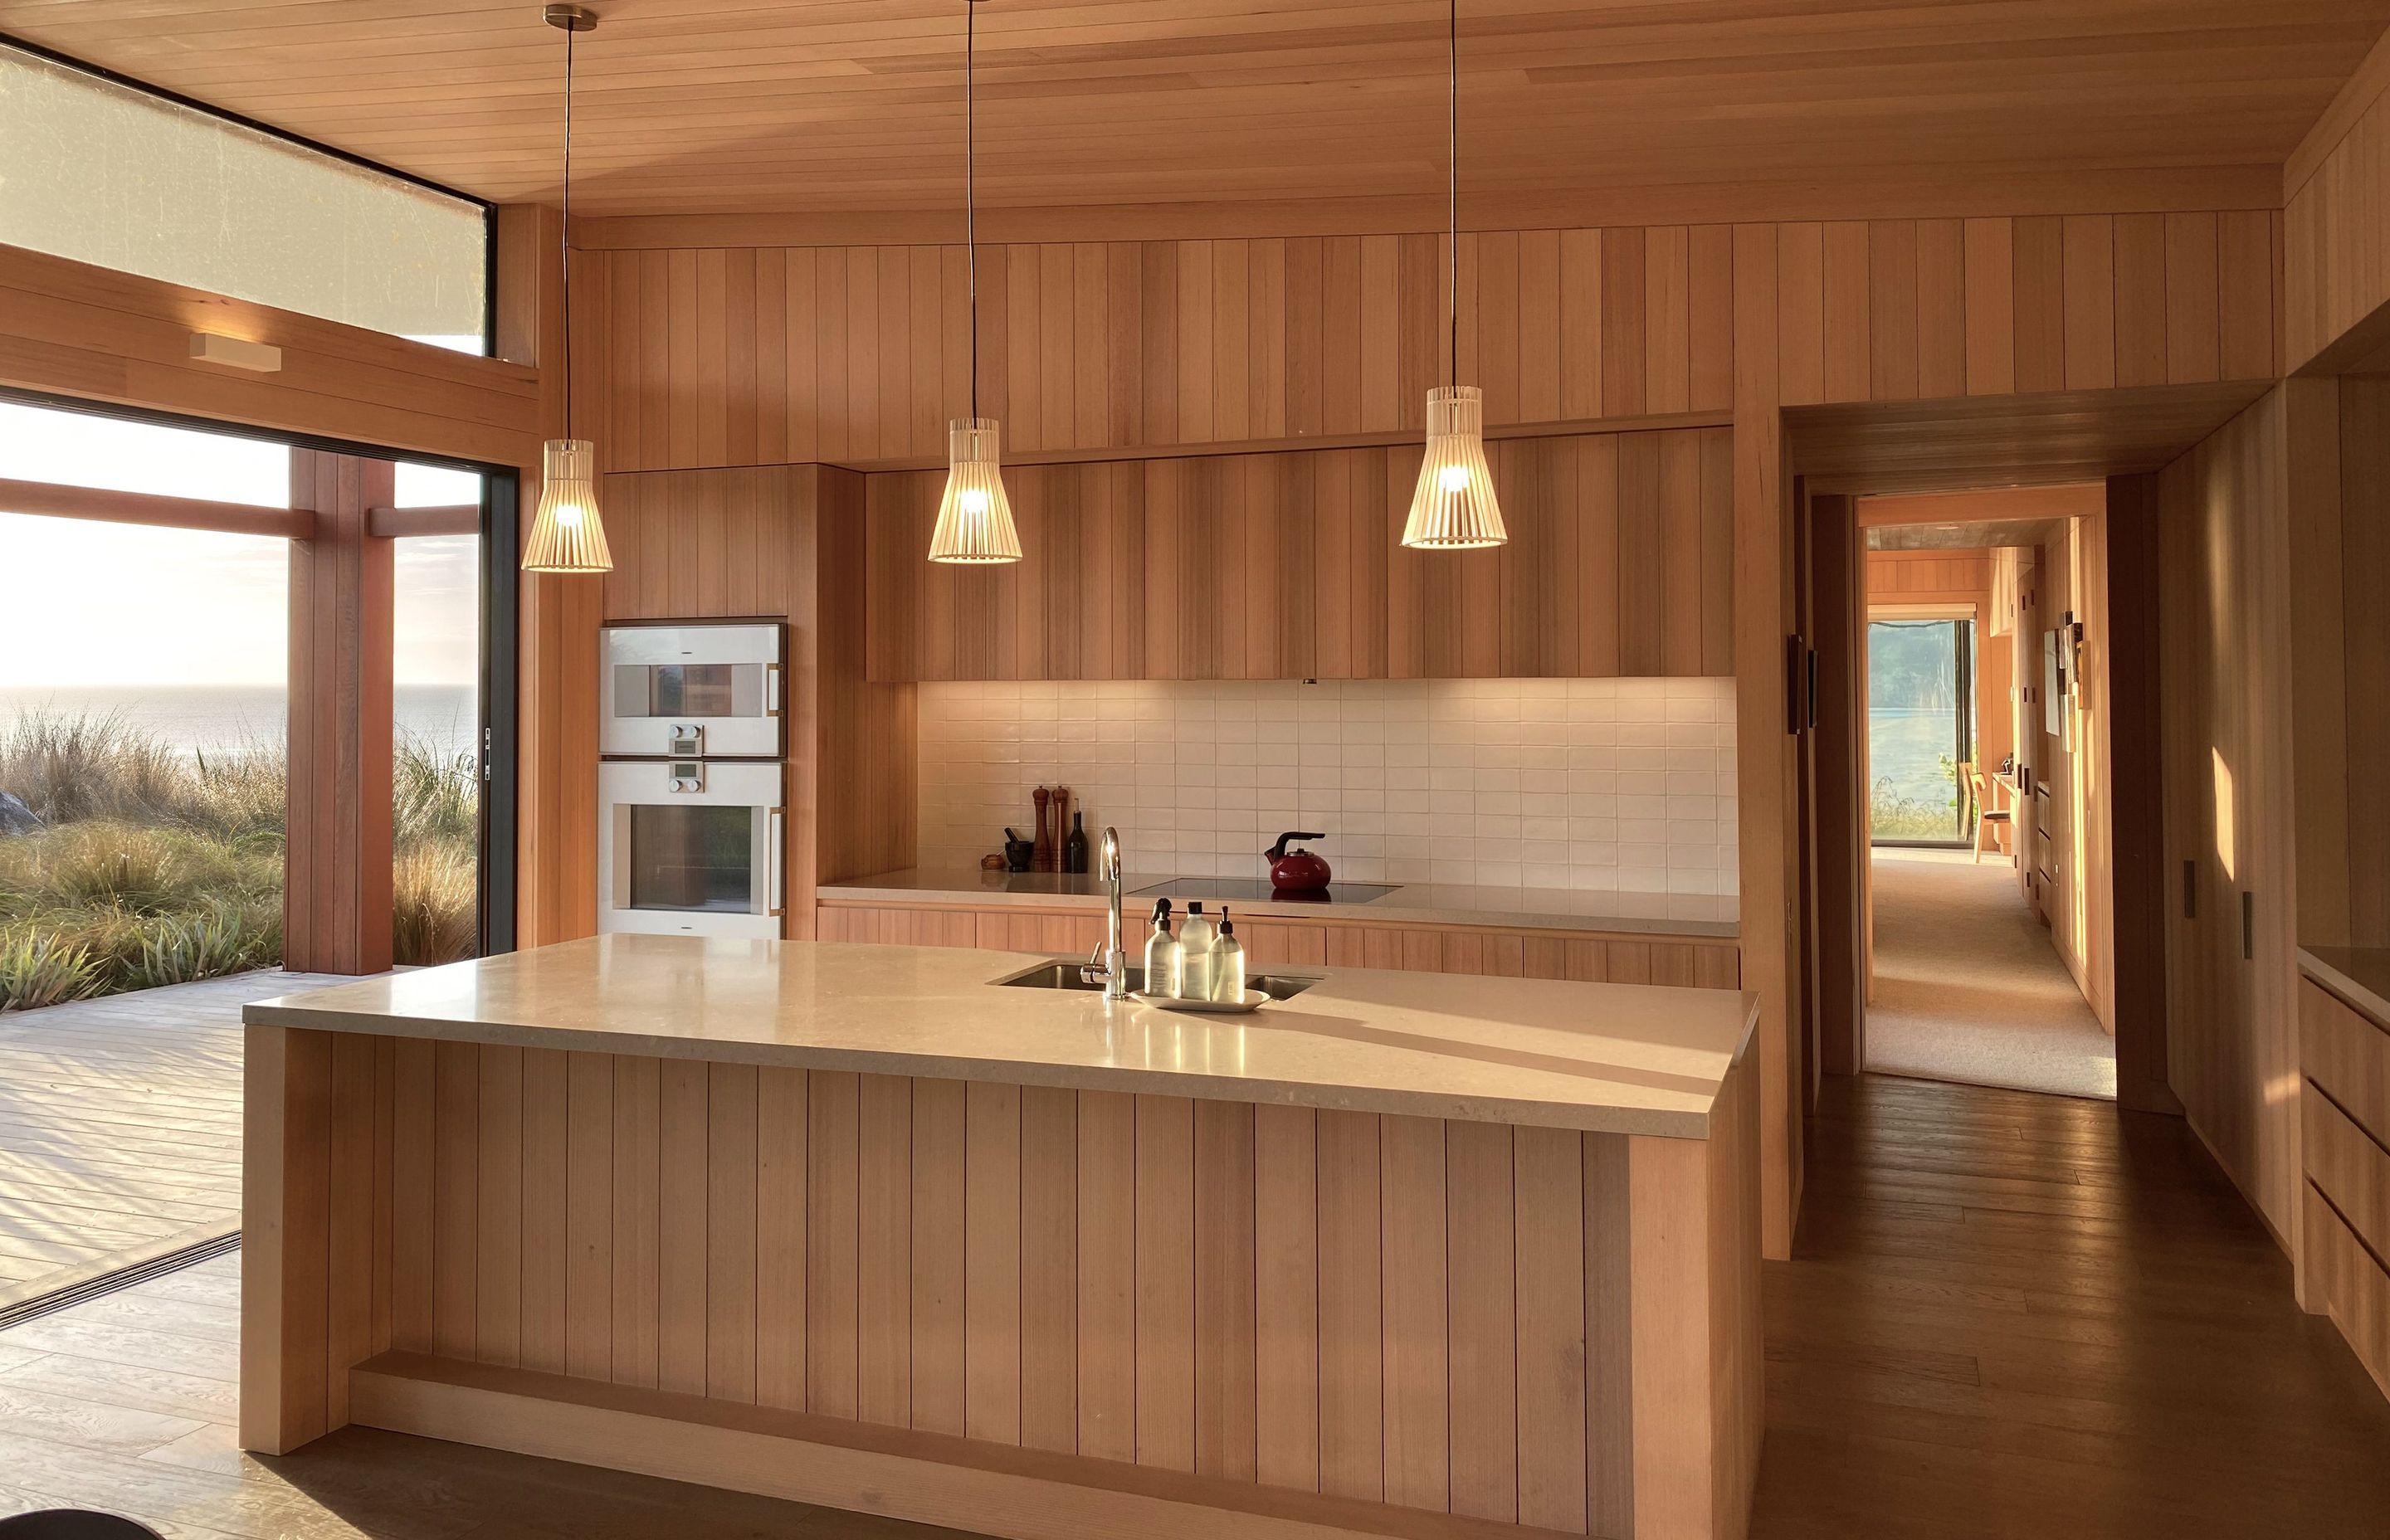 Coastal Retreat’s kitchen, clad in beautiful Tasmanian oak. | Photographer: Ruth Whitaker